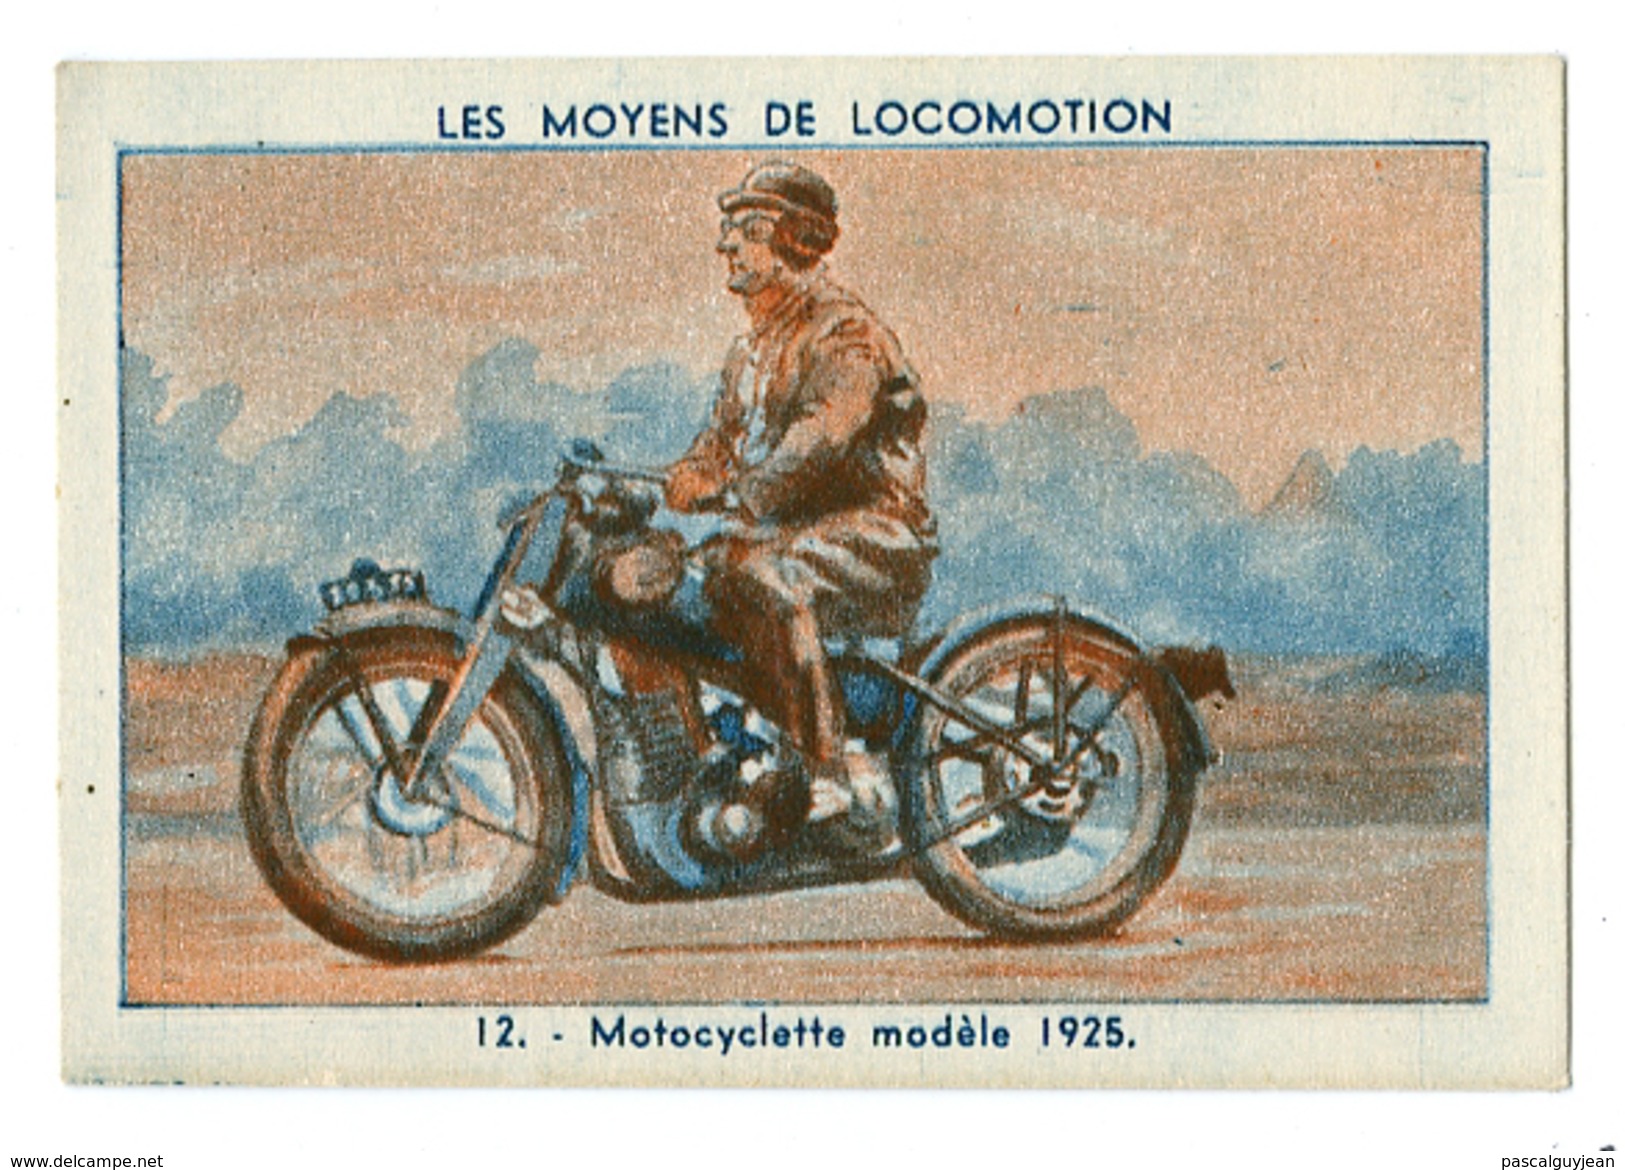 CHROMO LES MOYENS DE LOCOMOTION - MOTOCYCLETTE MODELE 1925 - Coches